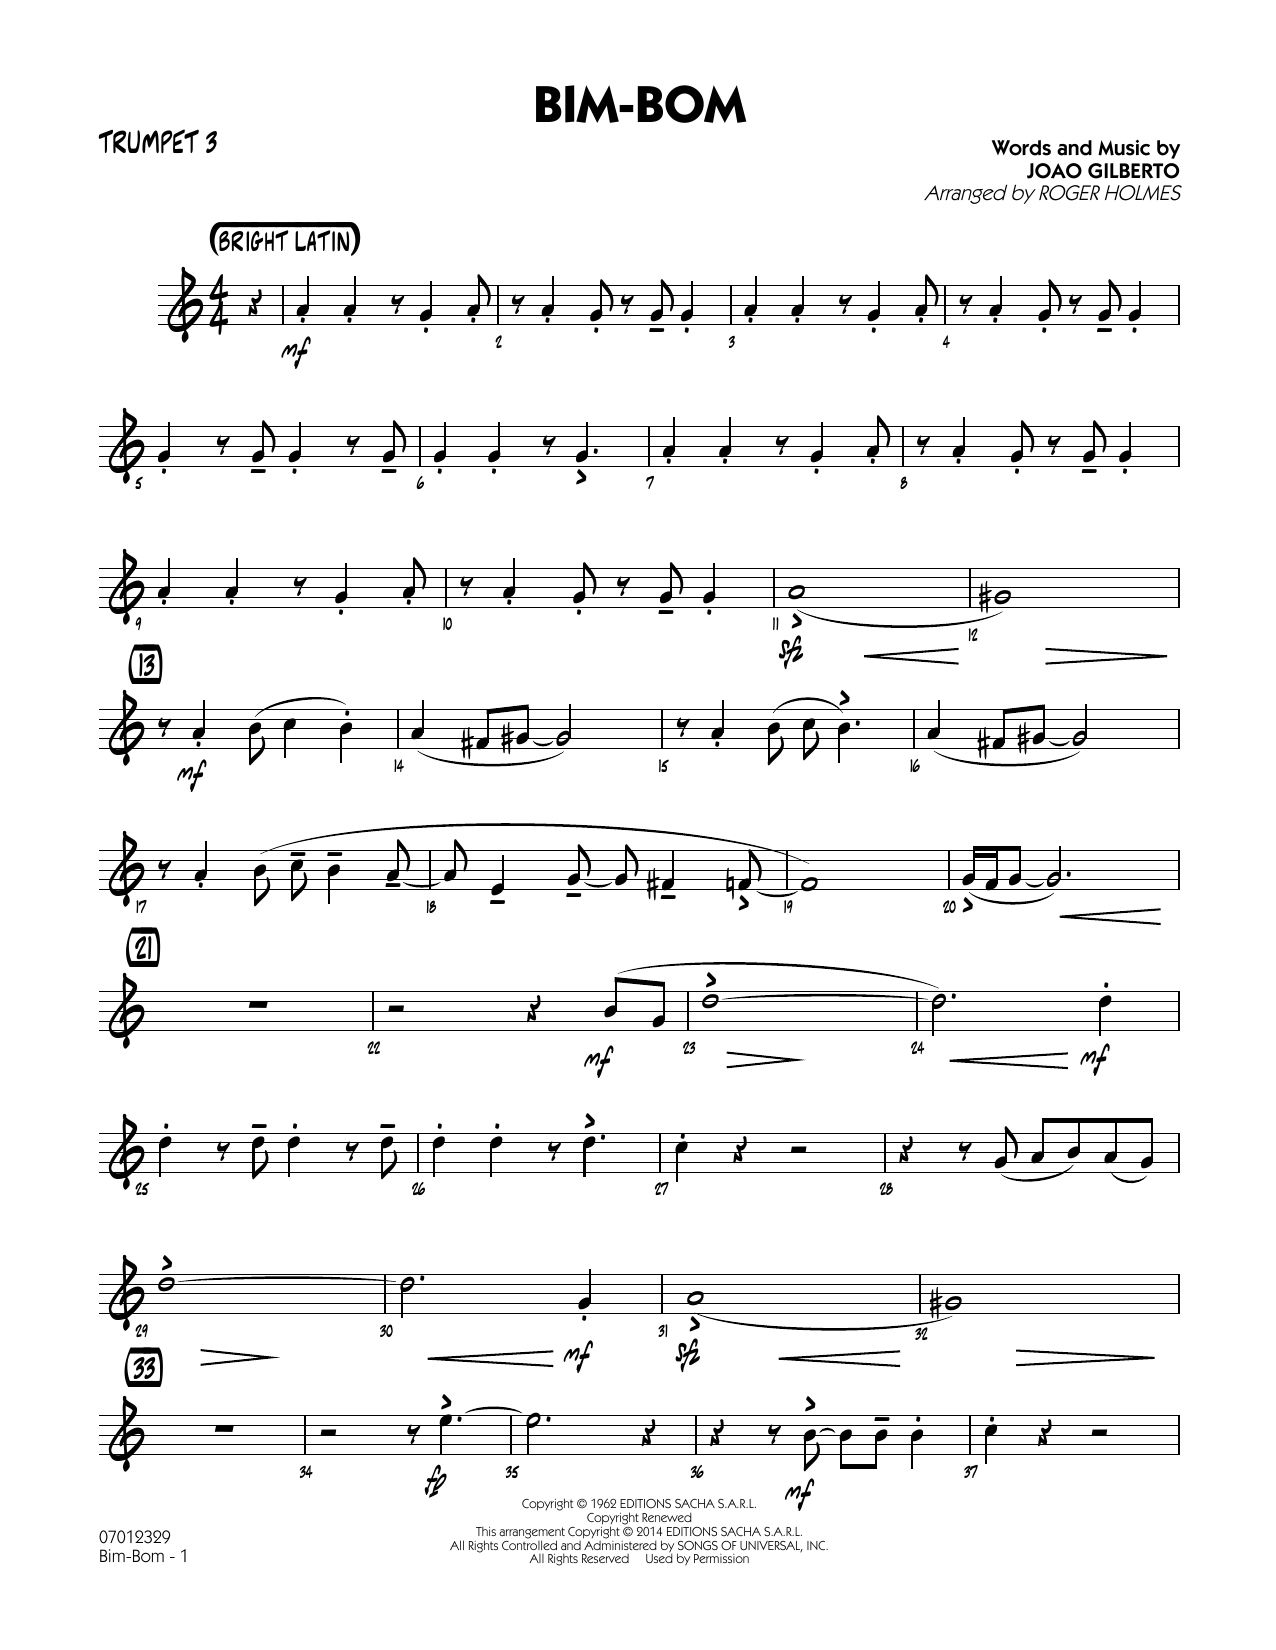 Roger Holmes Bim-Bom - Trumpet 3 sheet music notes and chords arranged for Jazz Ensemble